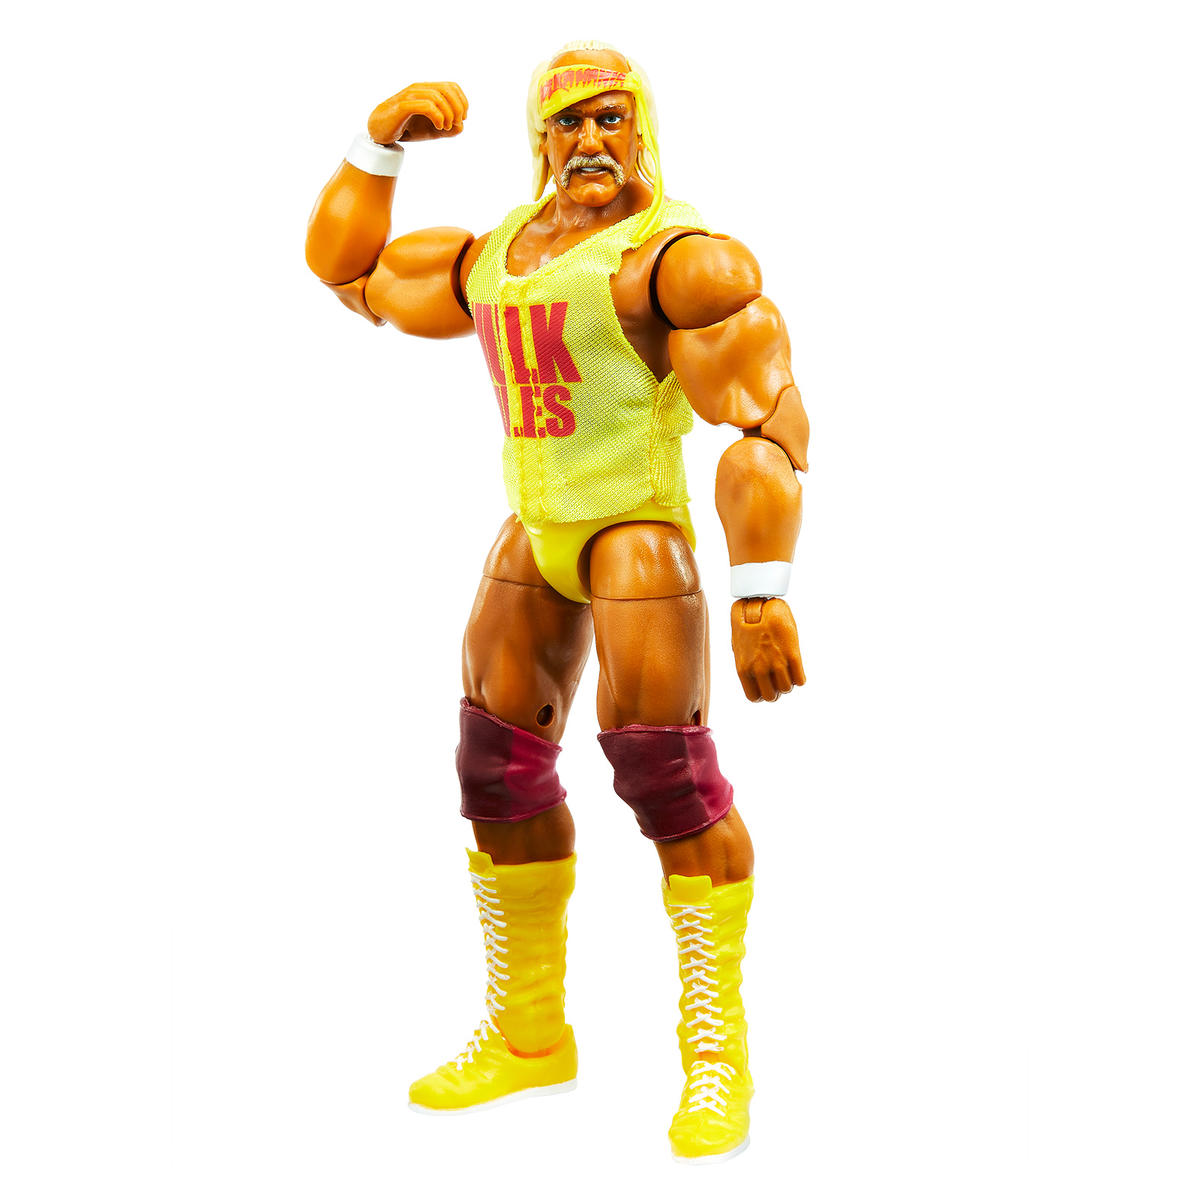 2022 WWE Mattel Elite Collection Ringside Exclusive Mega Powers 2-Pack: Hulk Hogan & Macho Man Randy Savage